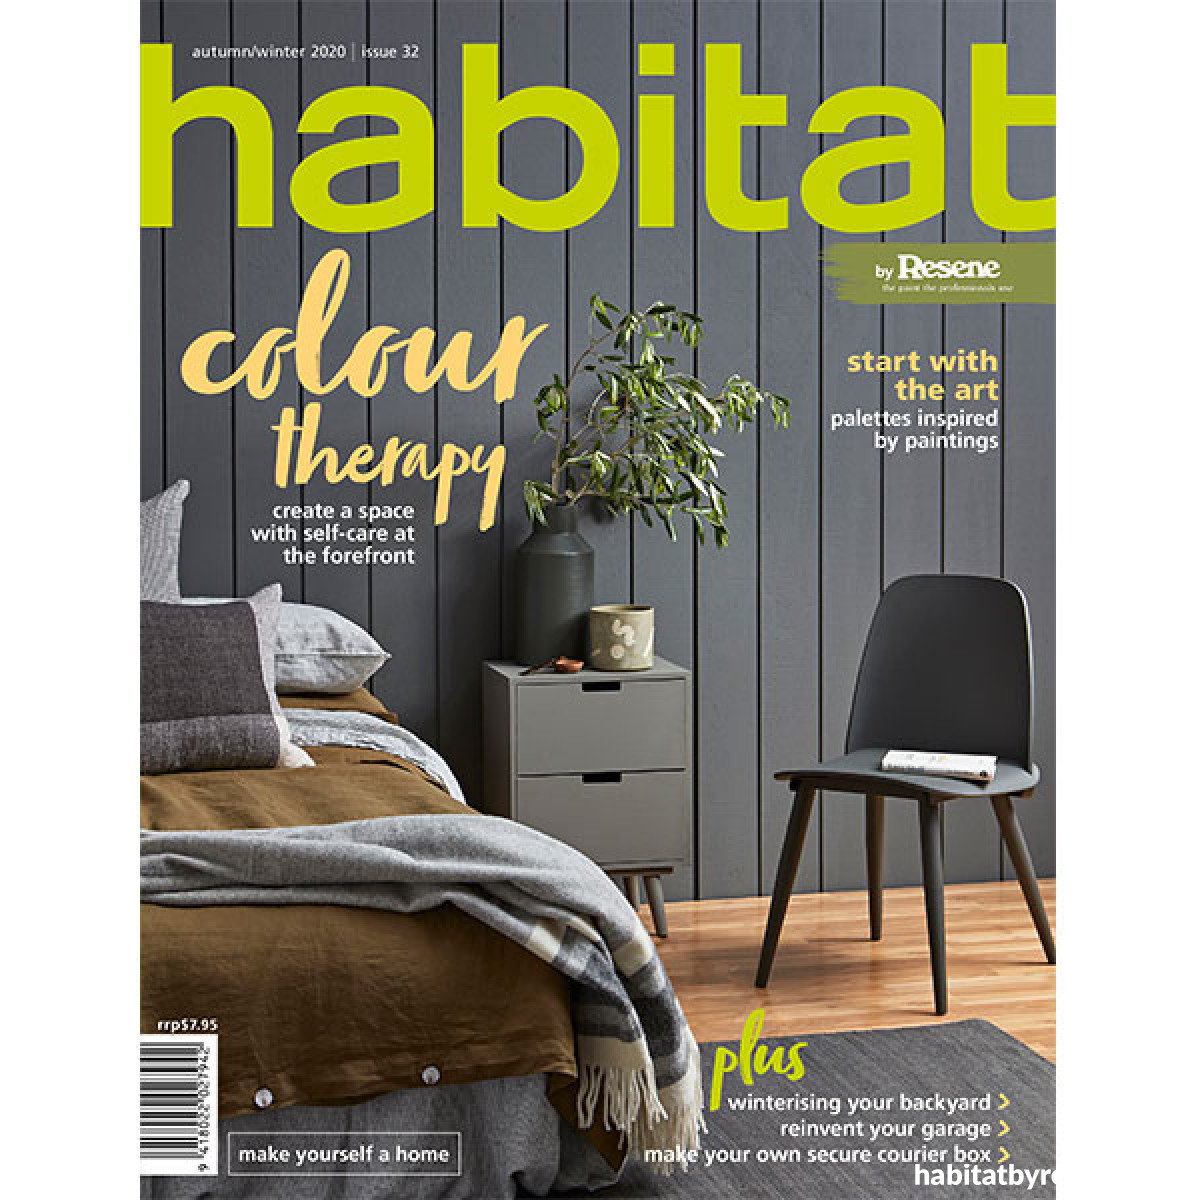 habitat by Resene magazine issue 32 is on its way | Habitat by Resene